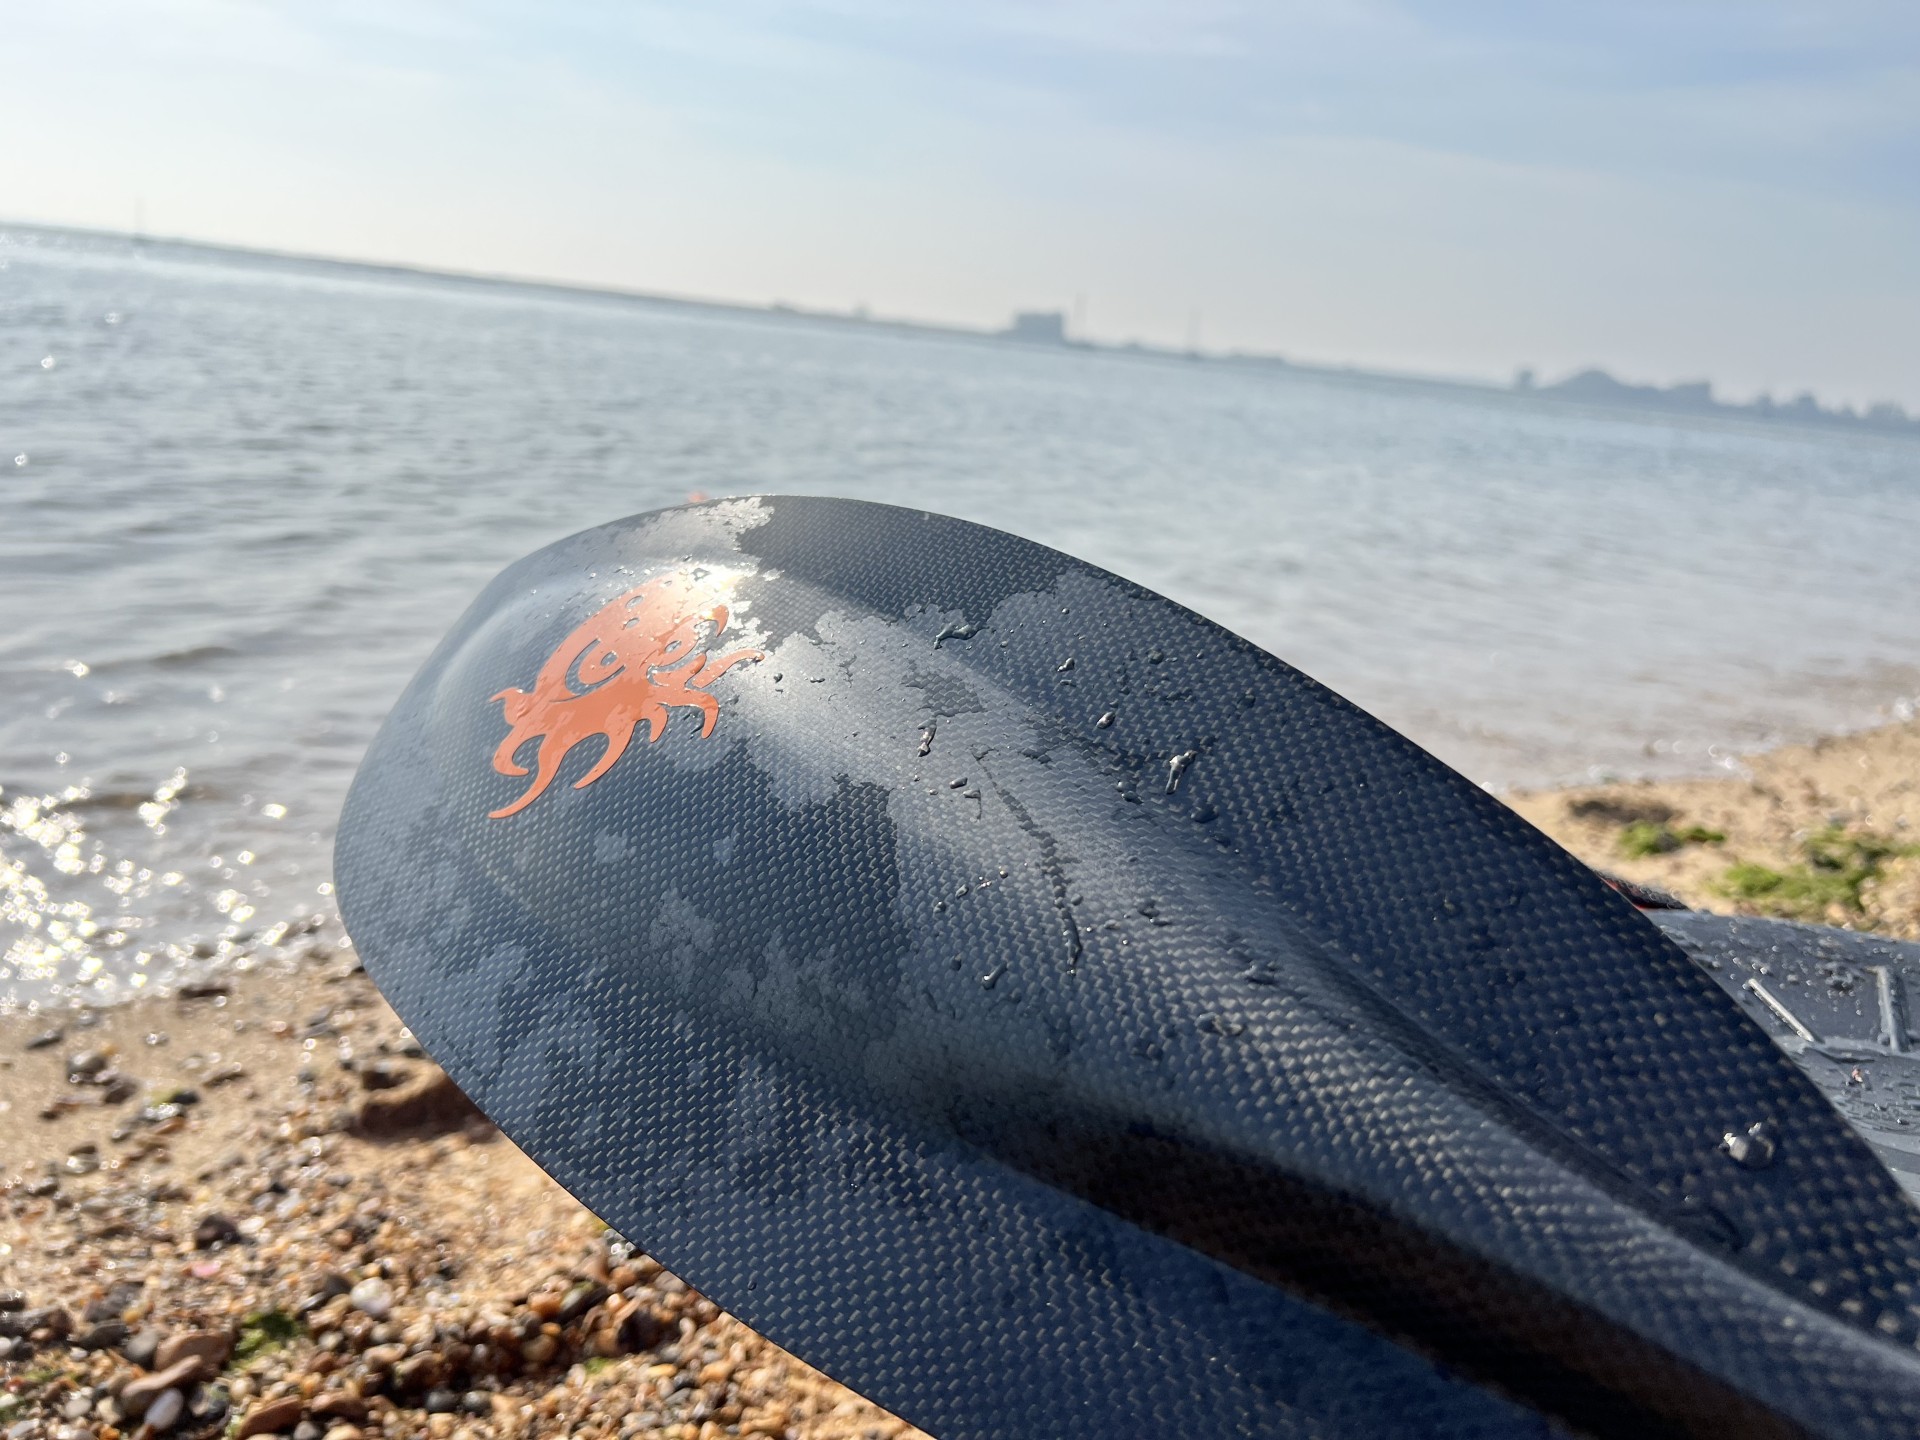 Full carbon fibre crankshaft sea kayak paddle available from NOMAD Sea Kayaking.